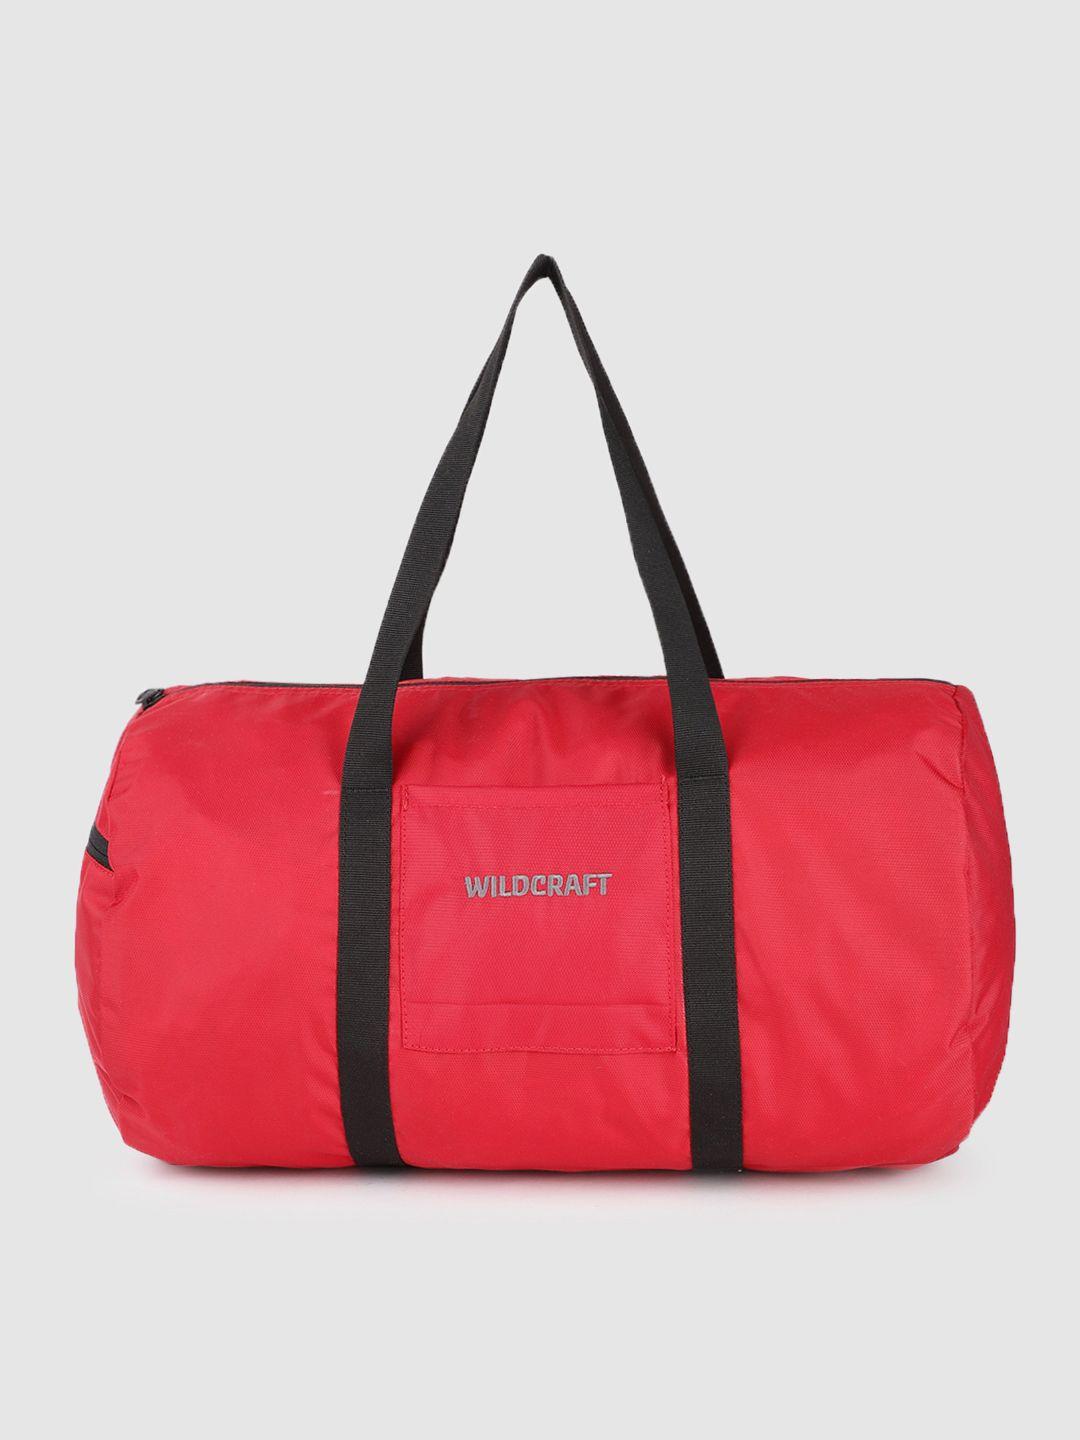 wildcraft-unisex-red-solid-1-duffel-bag